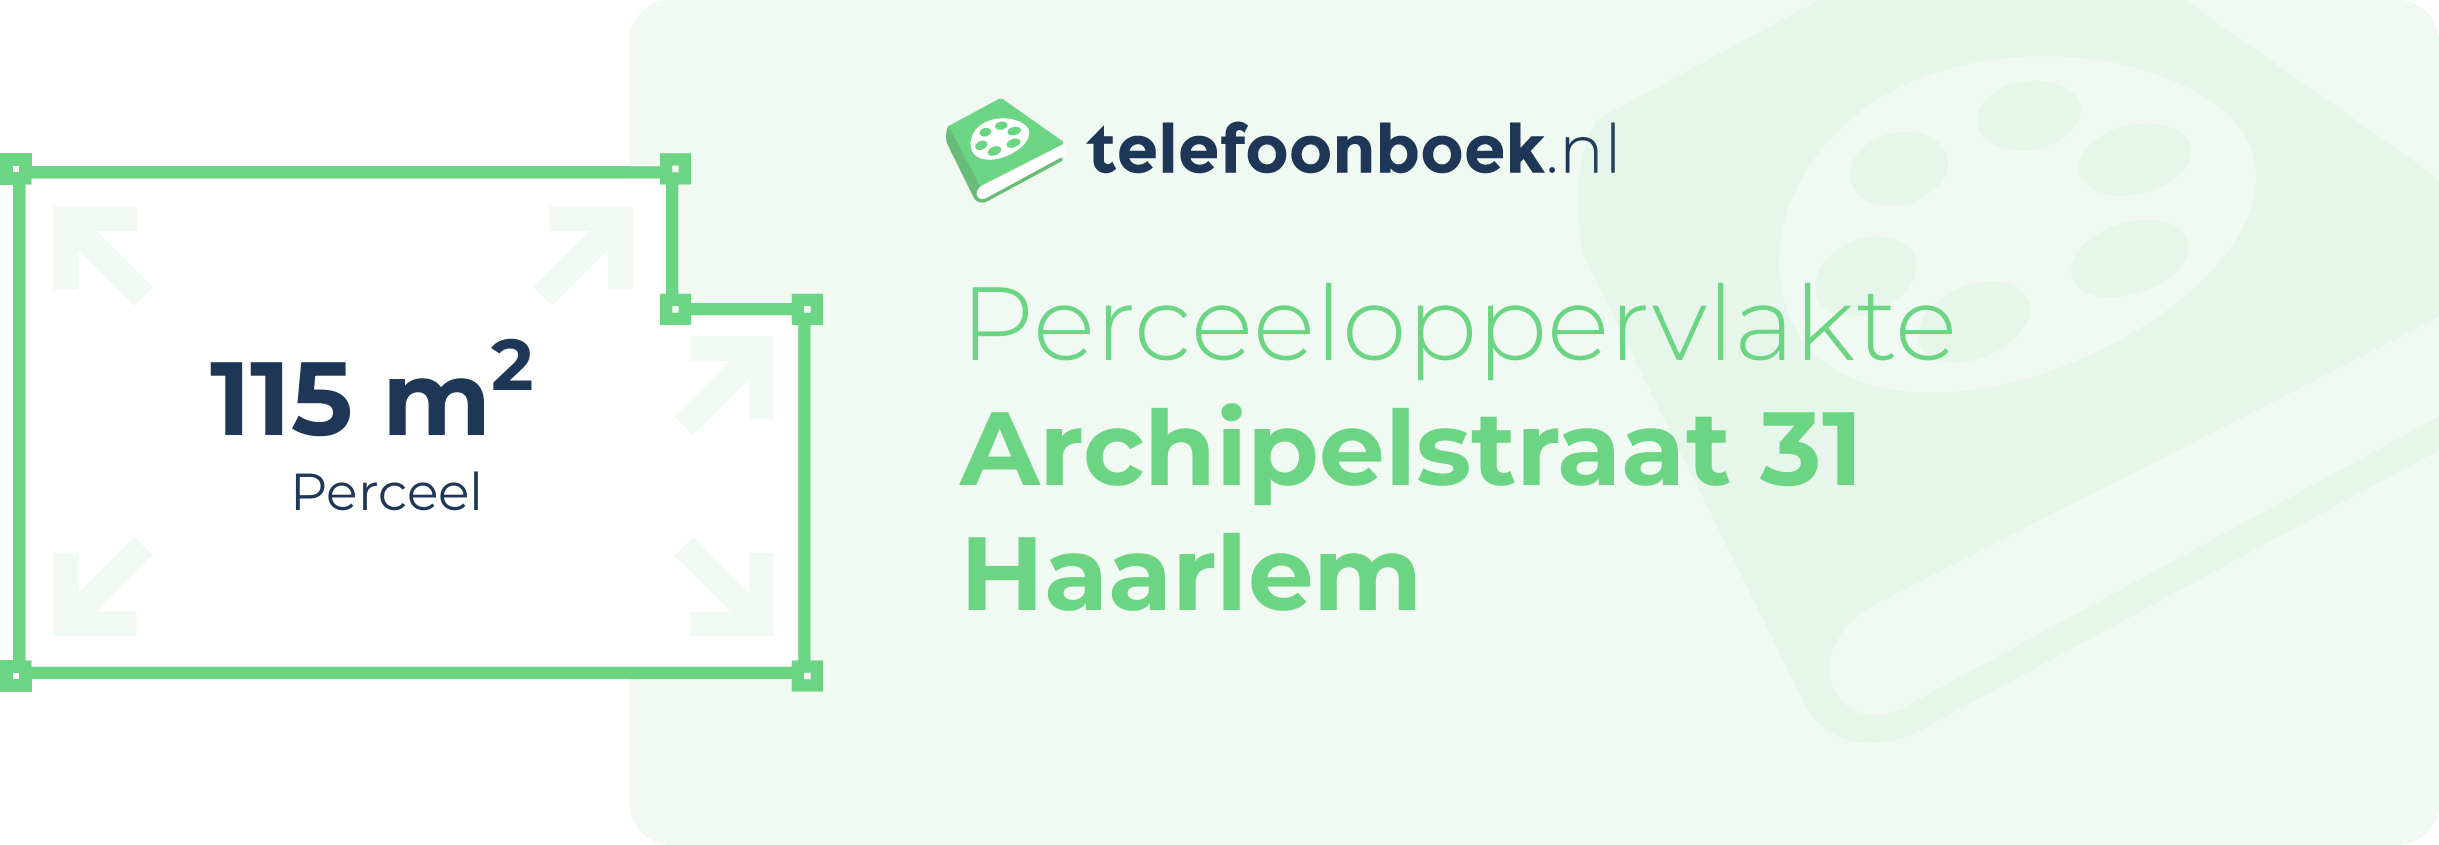 Perceeloppervlakte Archipelstraat 31 Haarlem